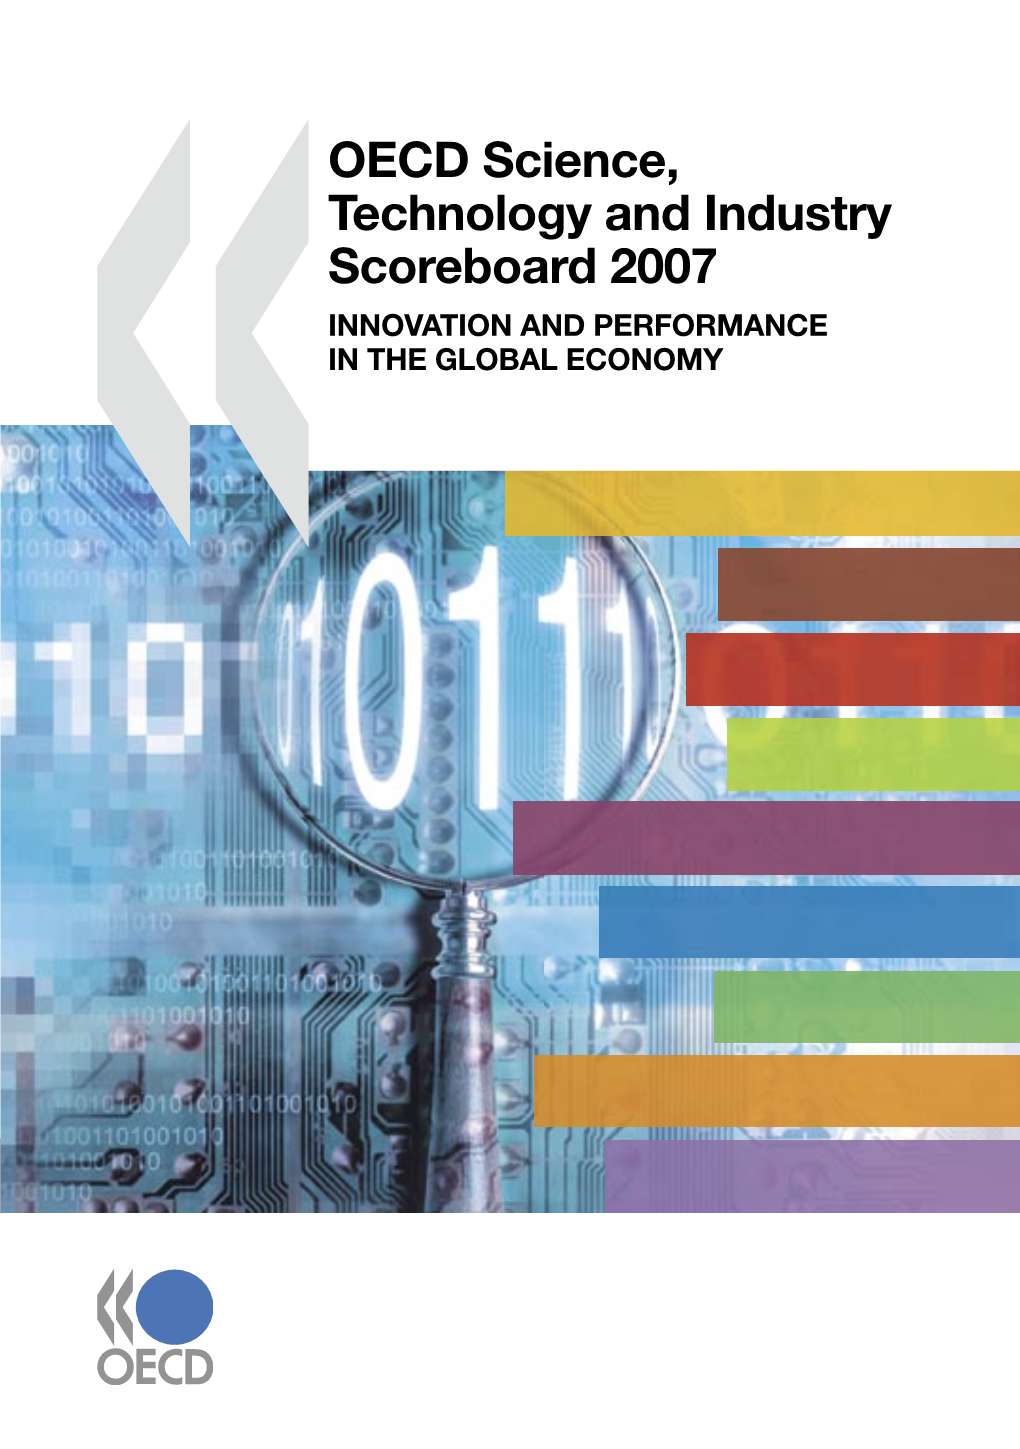 OECD Science, Technology and Industry Scoreboard 2007